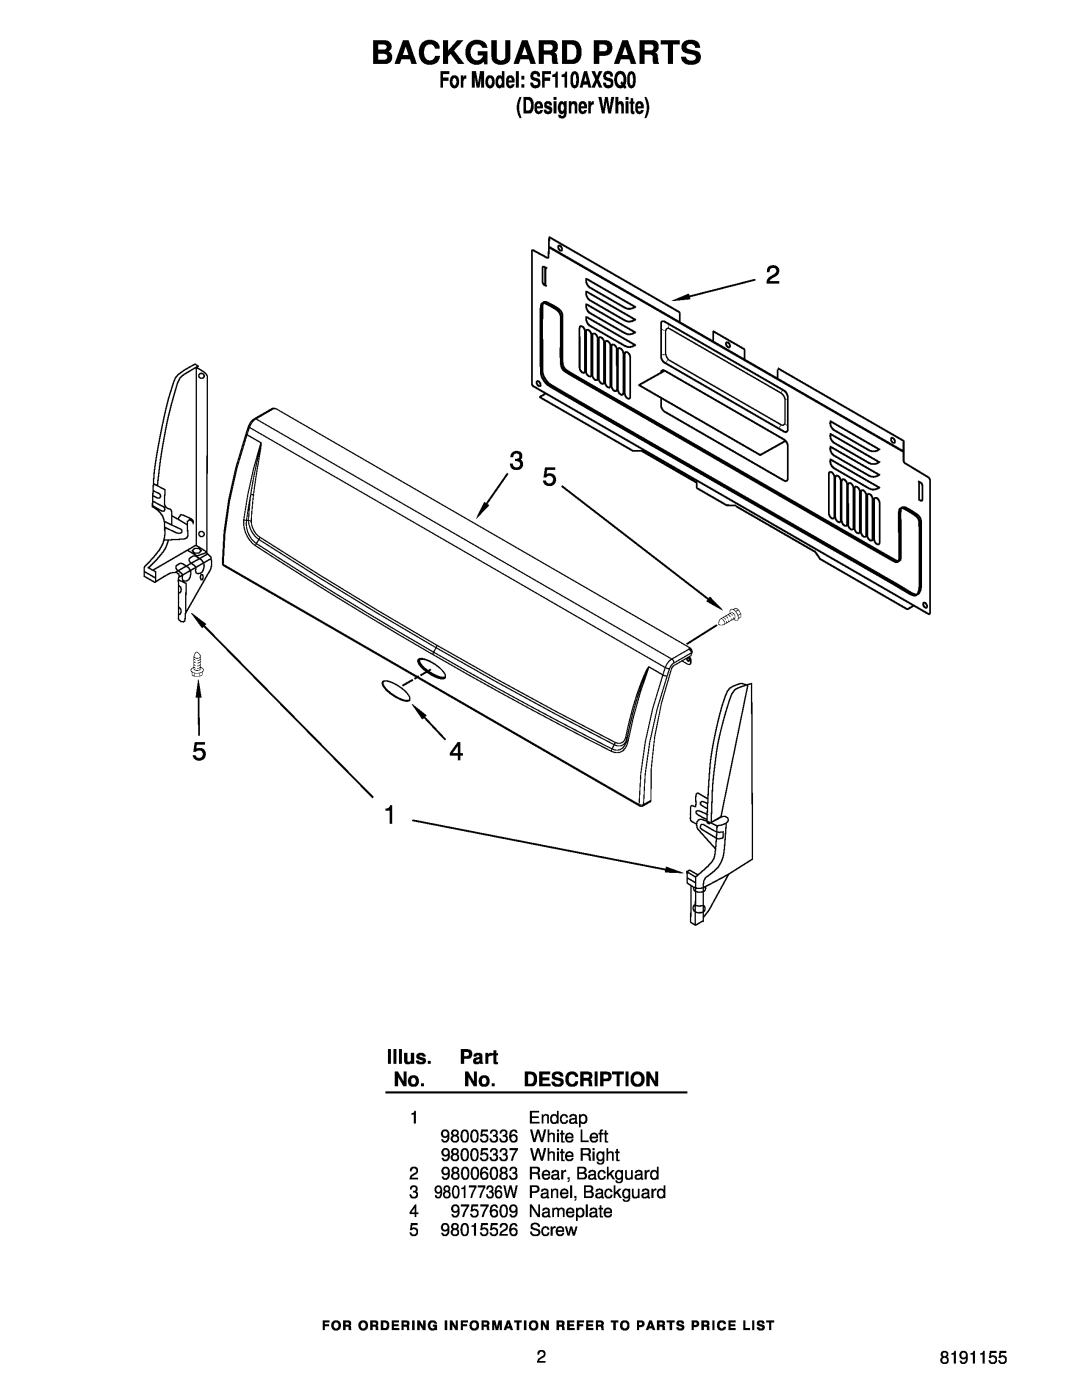 Whirlpool manual Backguard Parts, For Model: SF110AXSQ0 Designer White, Illus. Part No. No. DESCRIPTION 